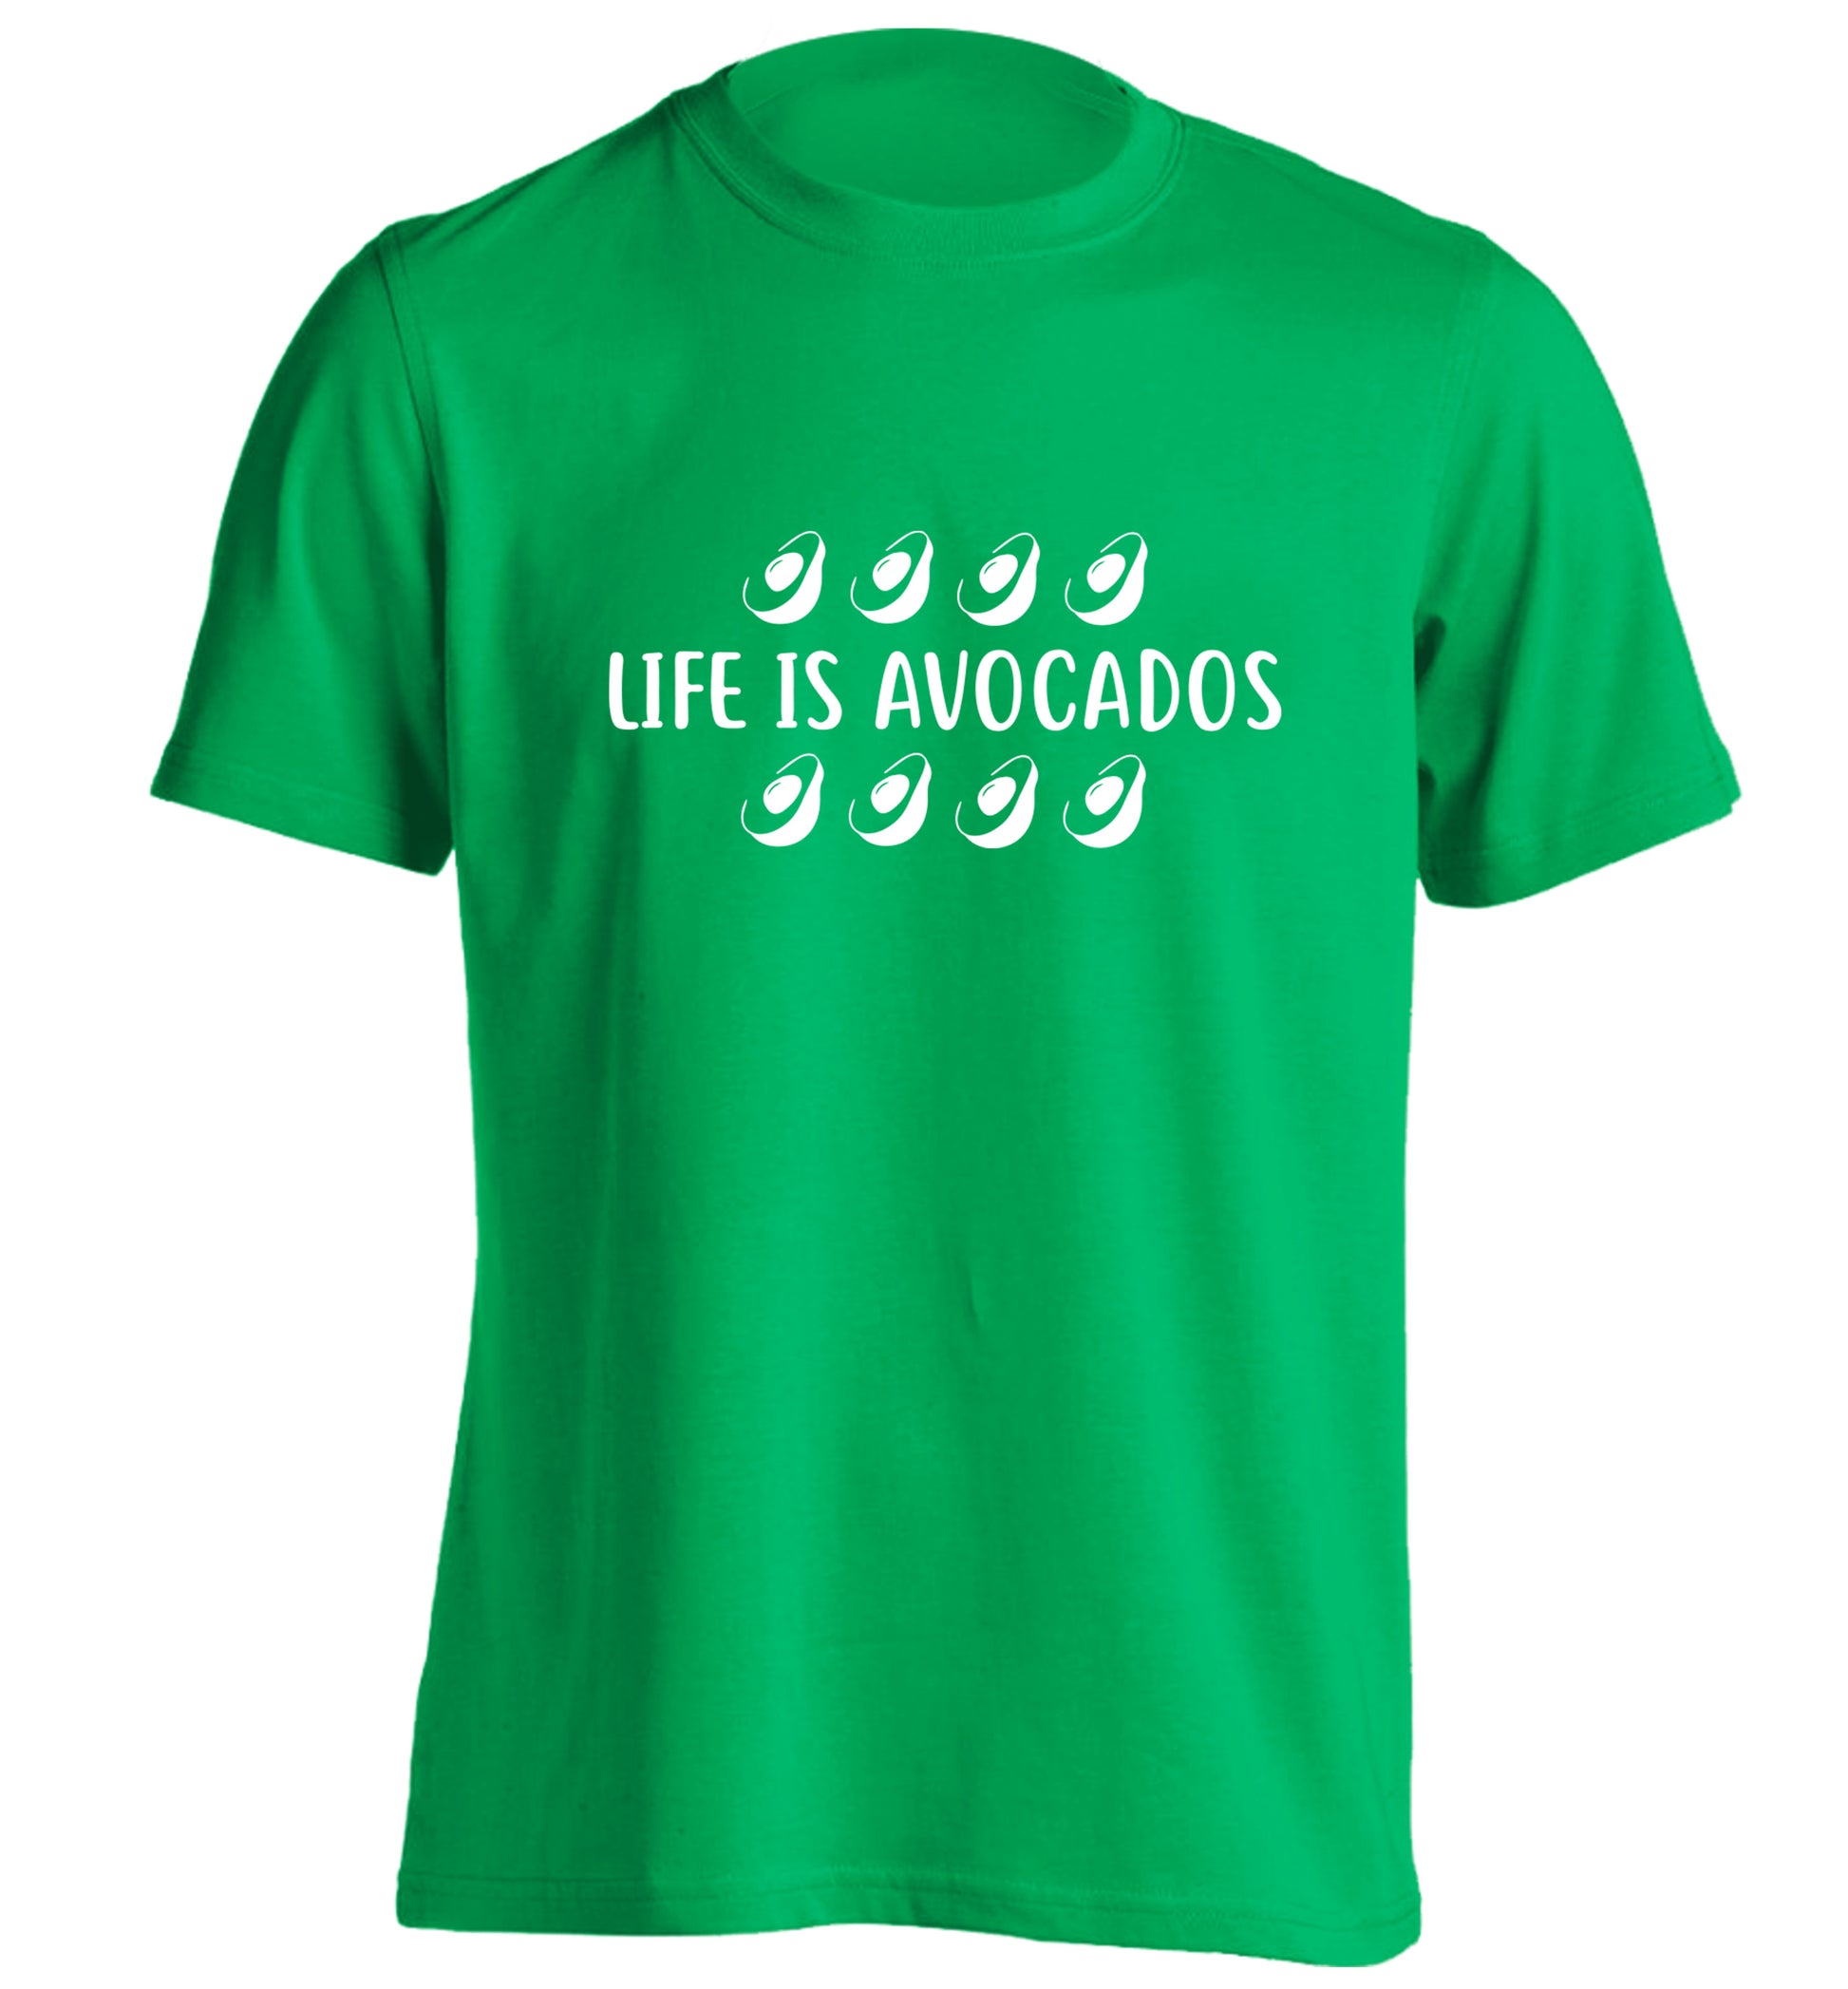 Life is avocados adults unisex green Tshirt 2XL